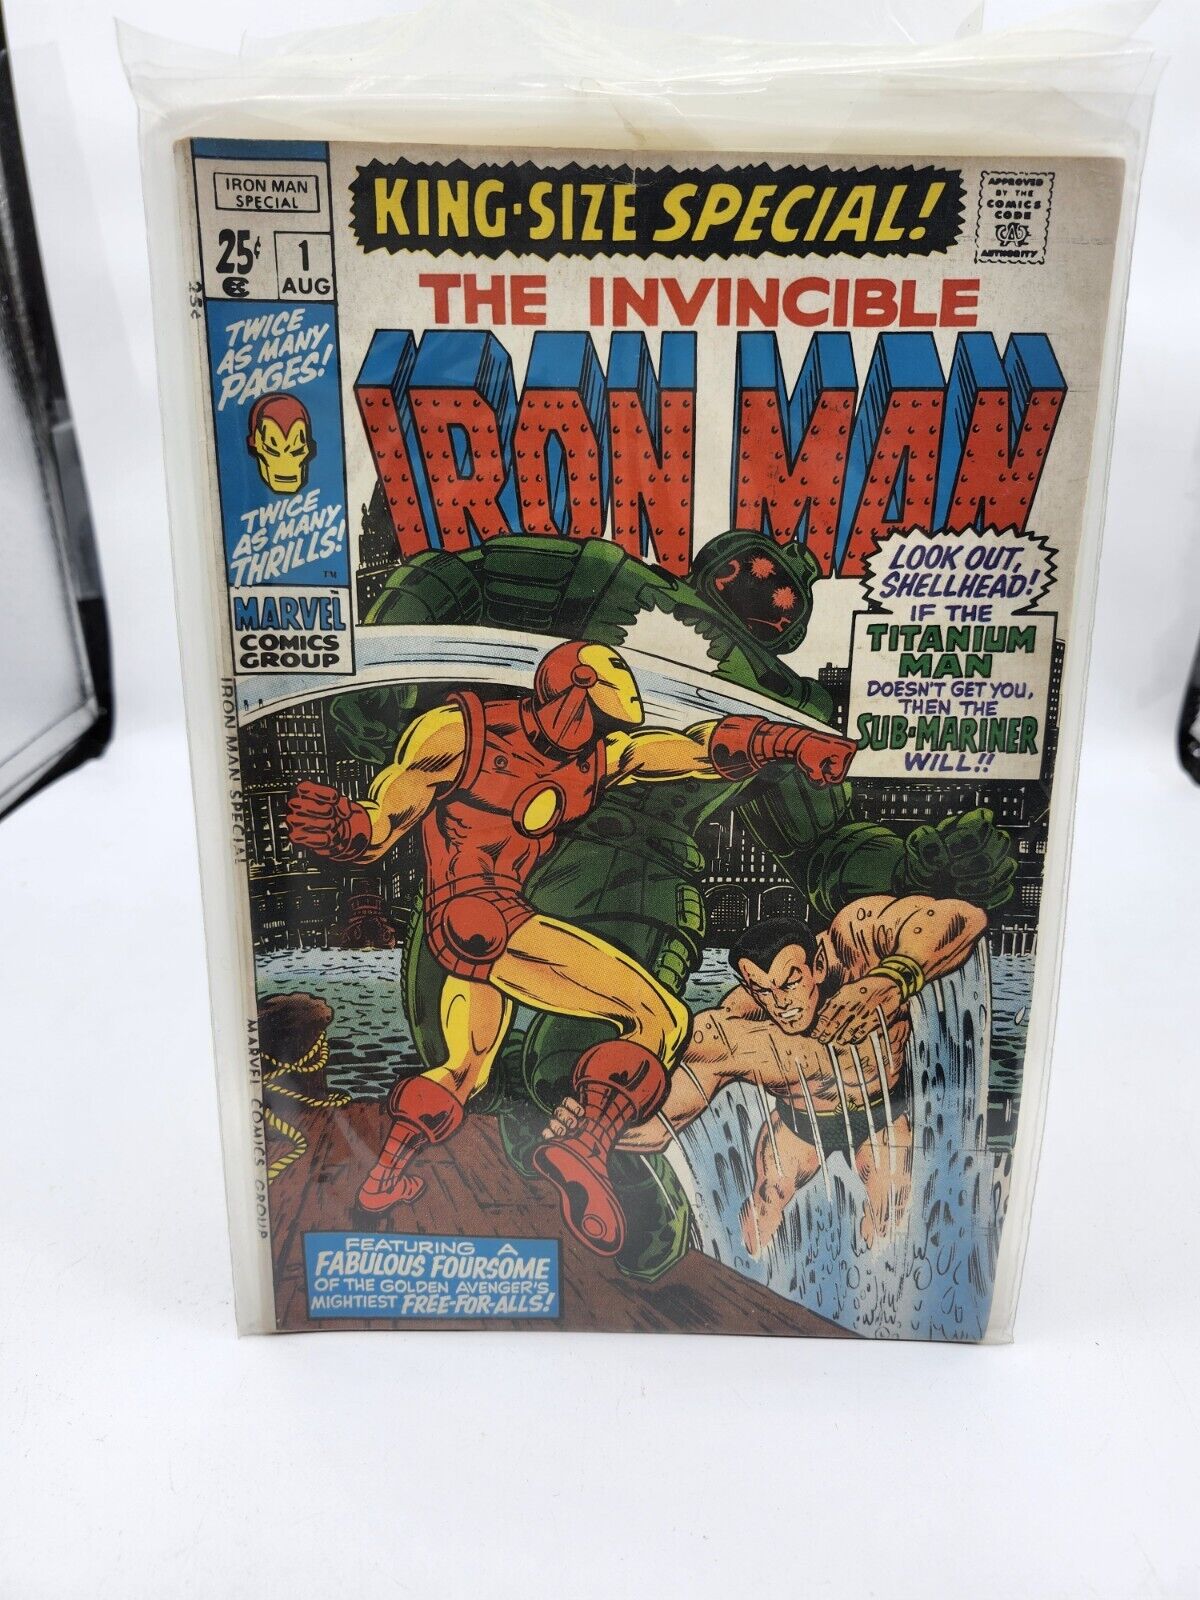 THE INVINCIBLE IRON MAN King-Size Special #1 1970 Marvel NAMOR, Titanium Man 